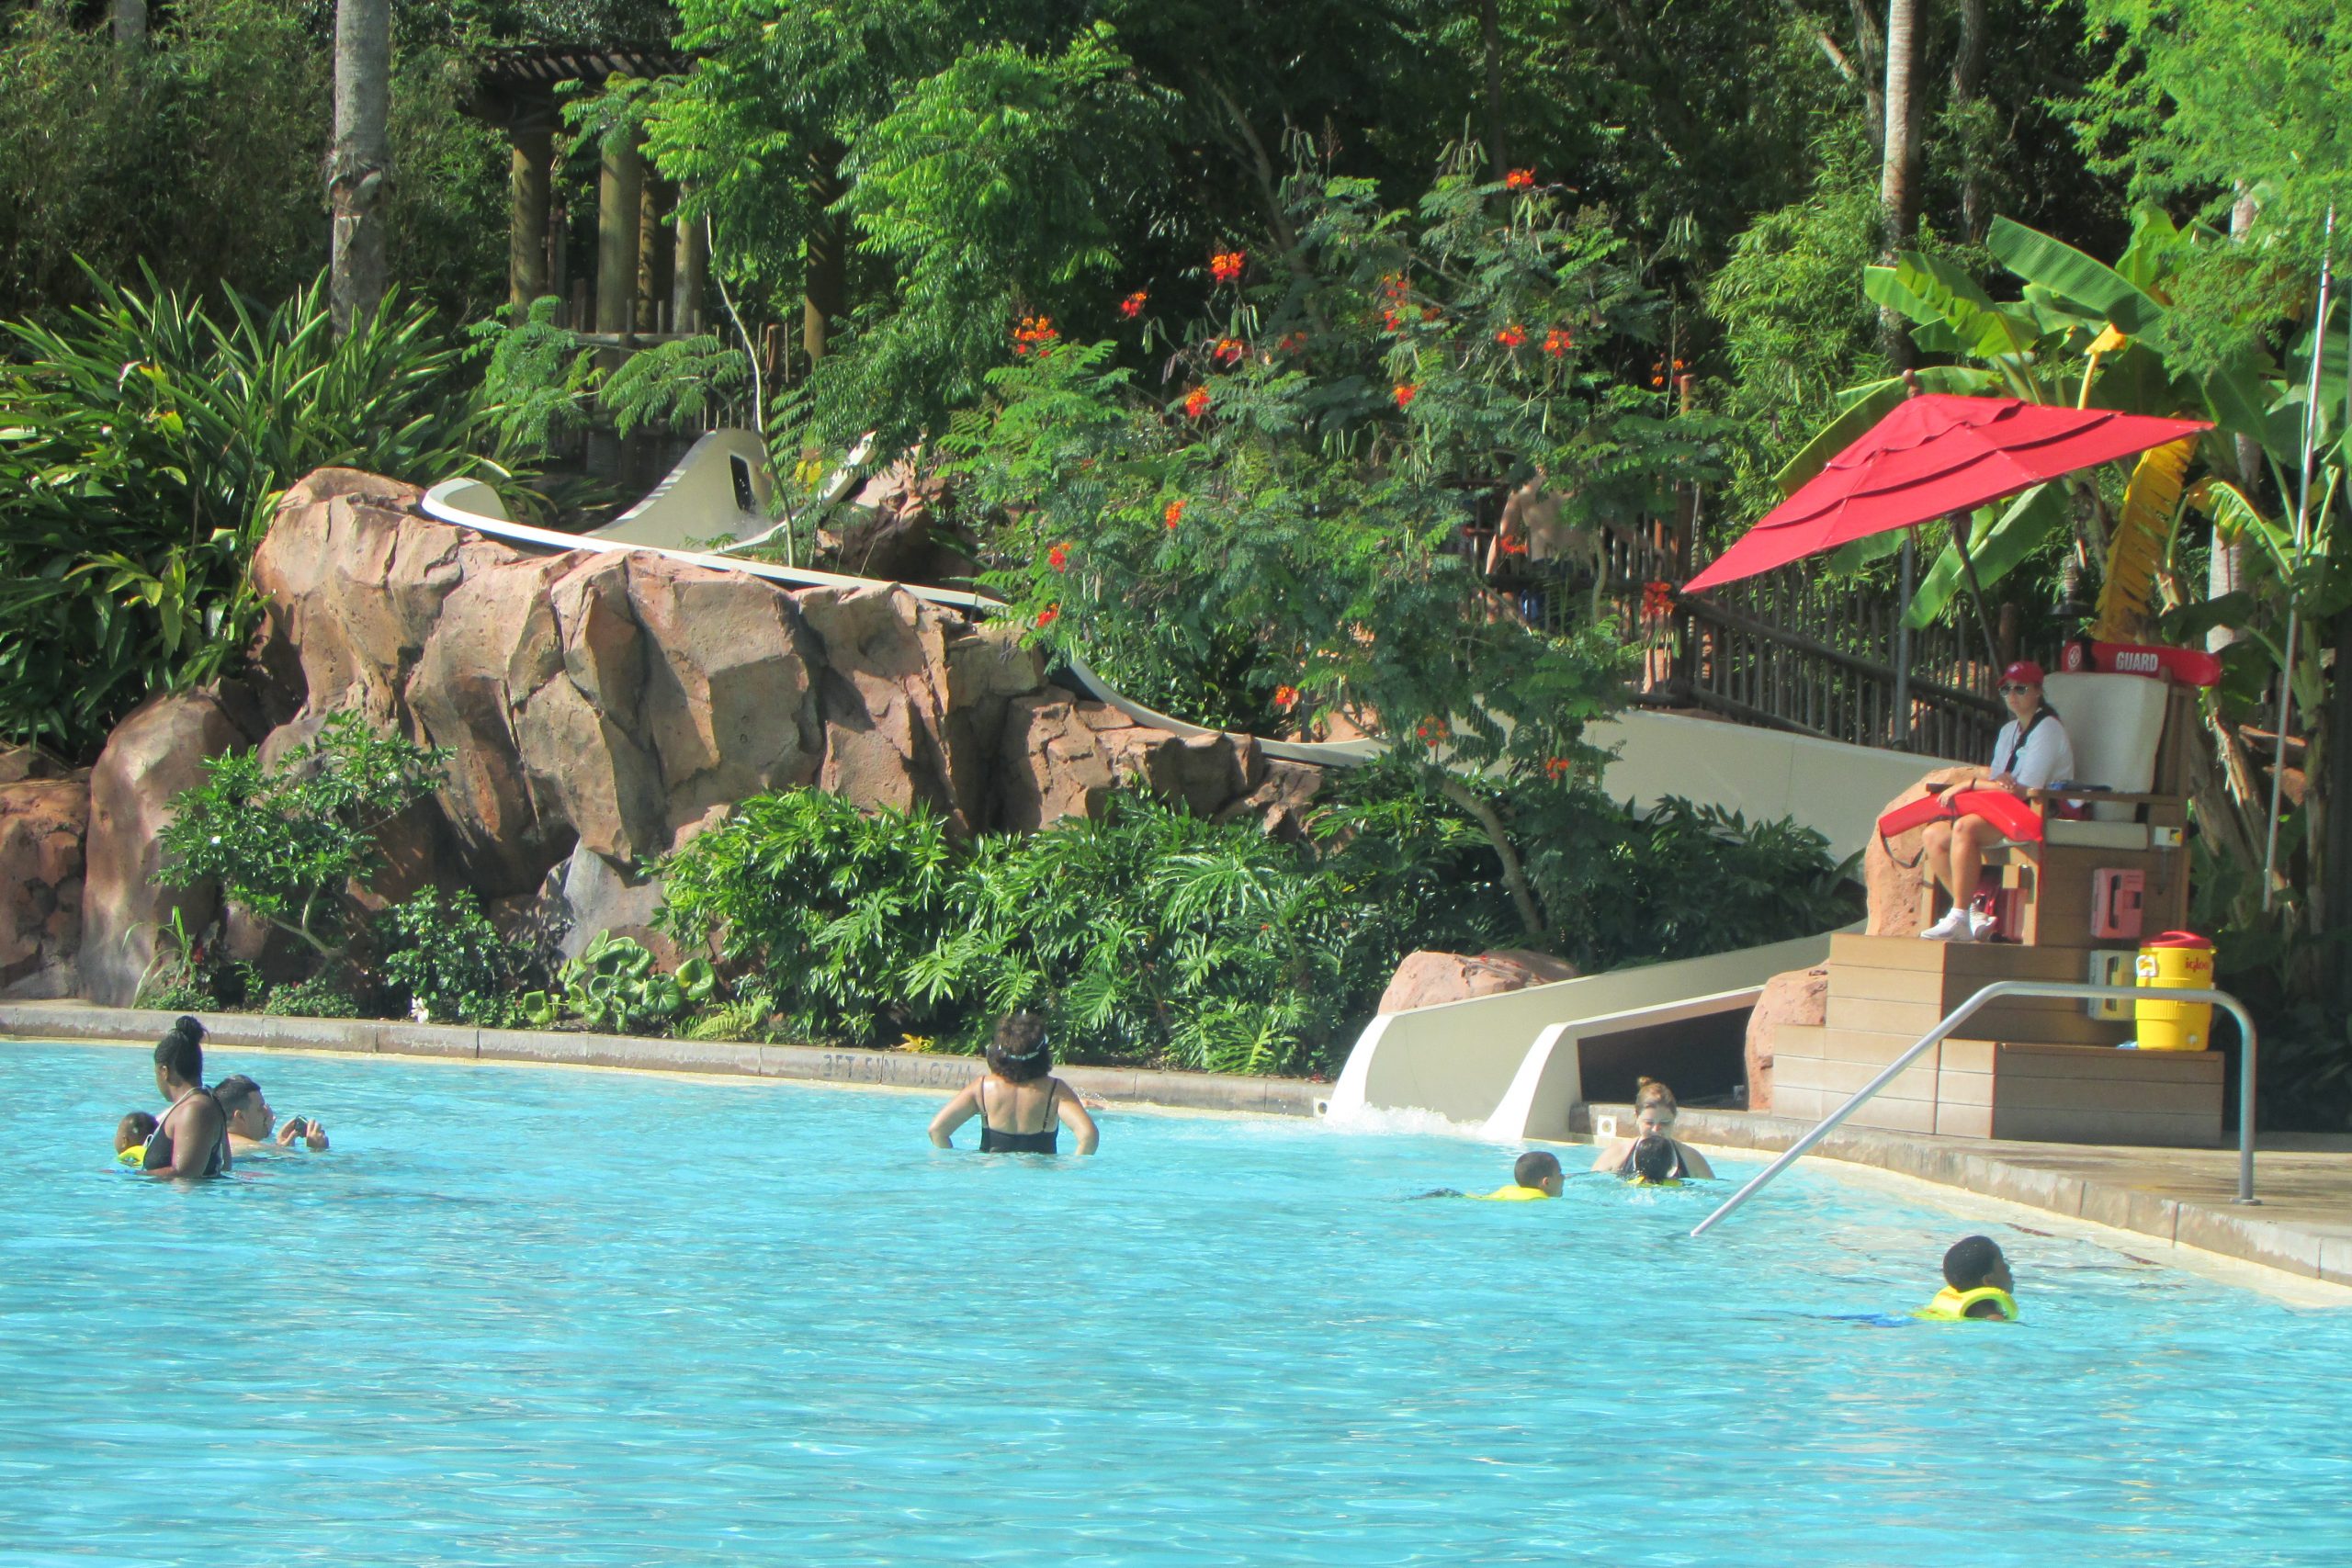 Pool slide at Jambo House pool in Animal Kingdom Lodge